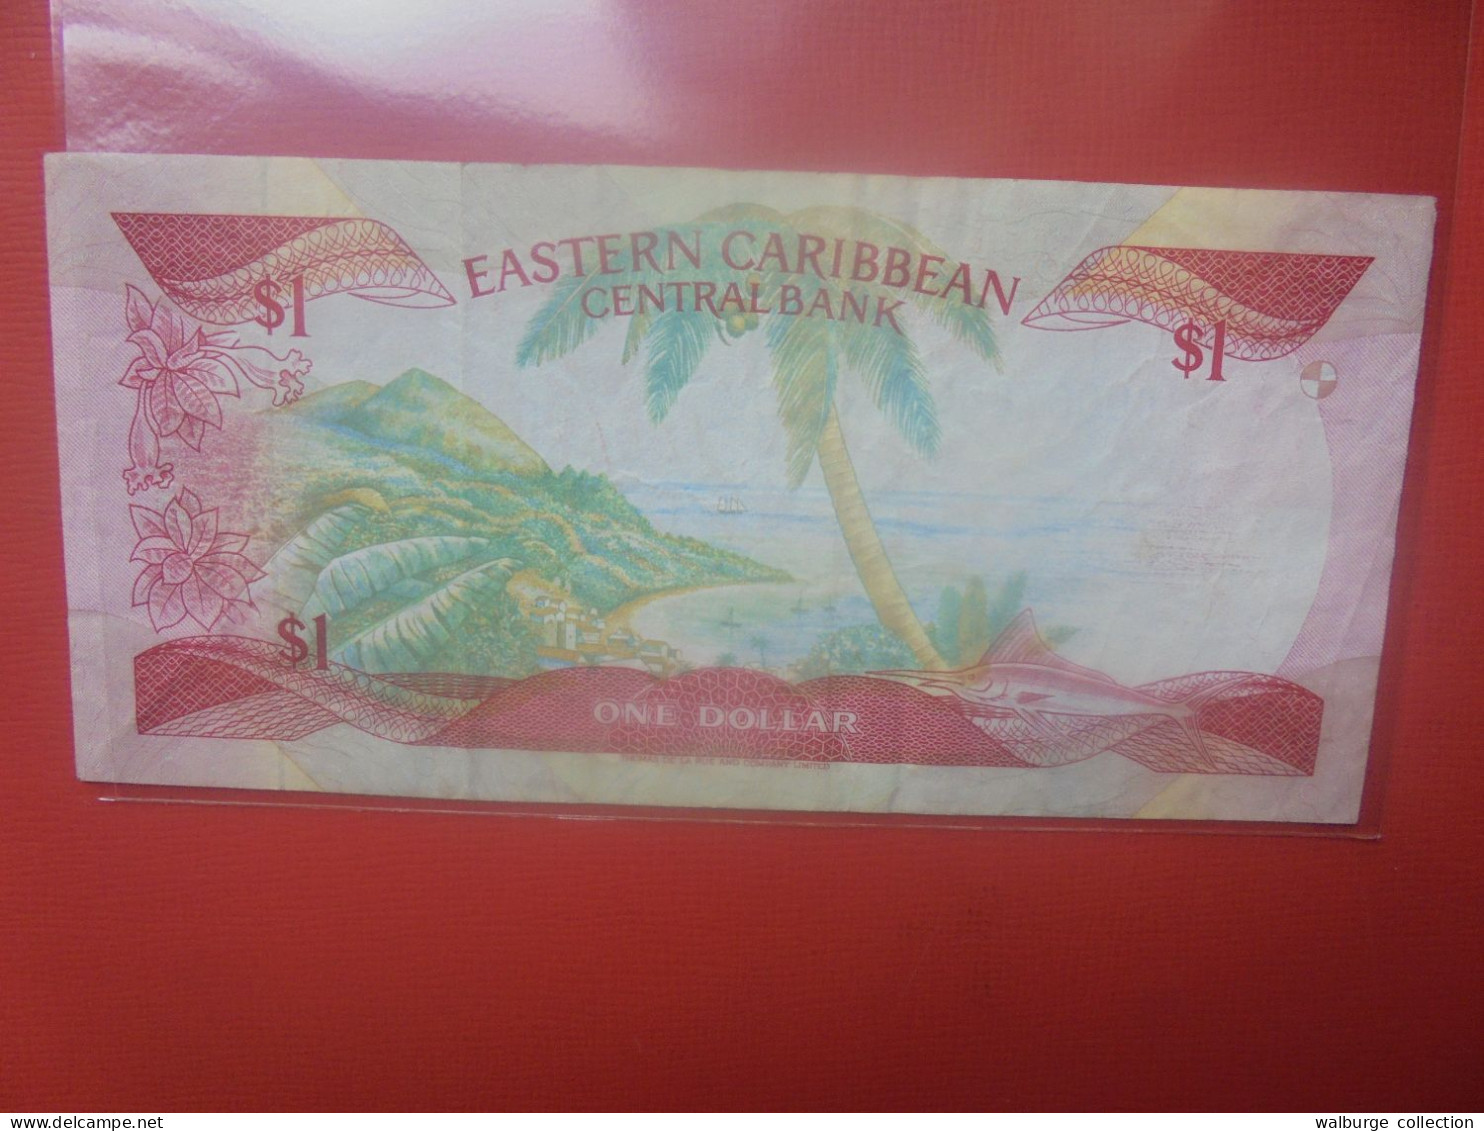 EAST-CARAIBES 1$ ND (1985-88) Circuler (B.29) - East Carribeans